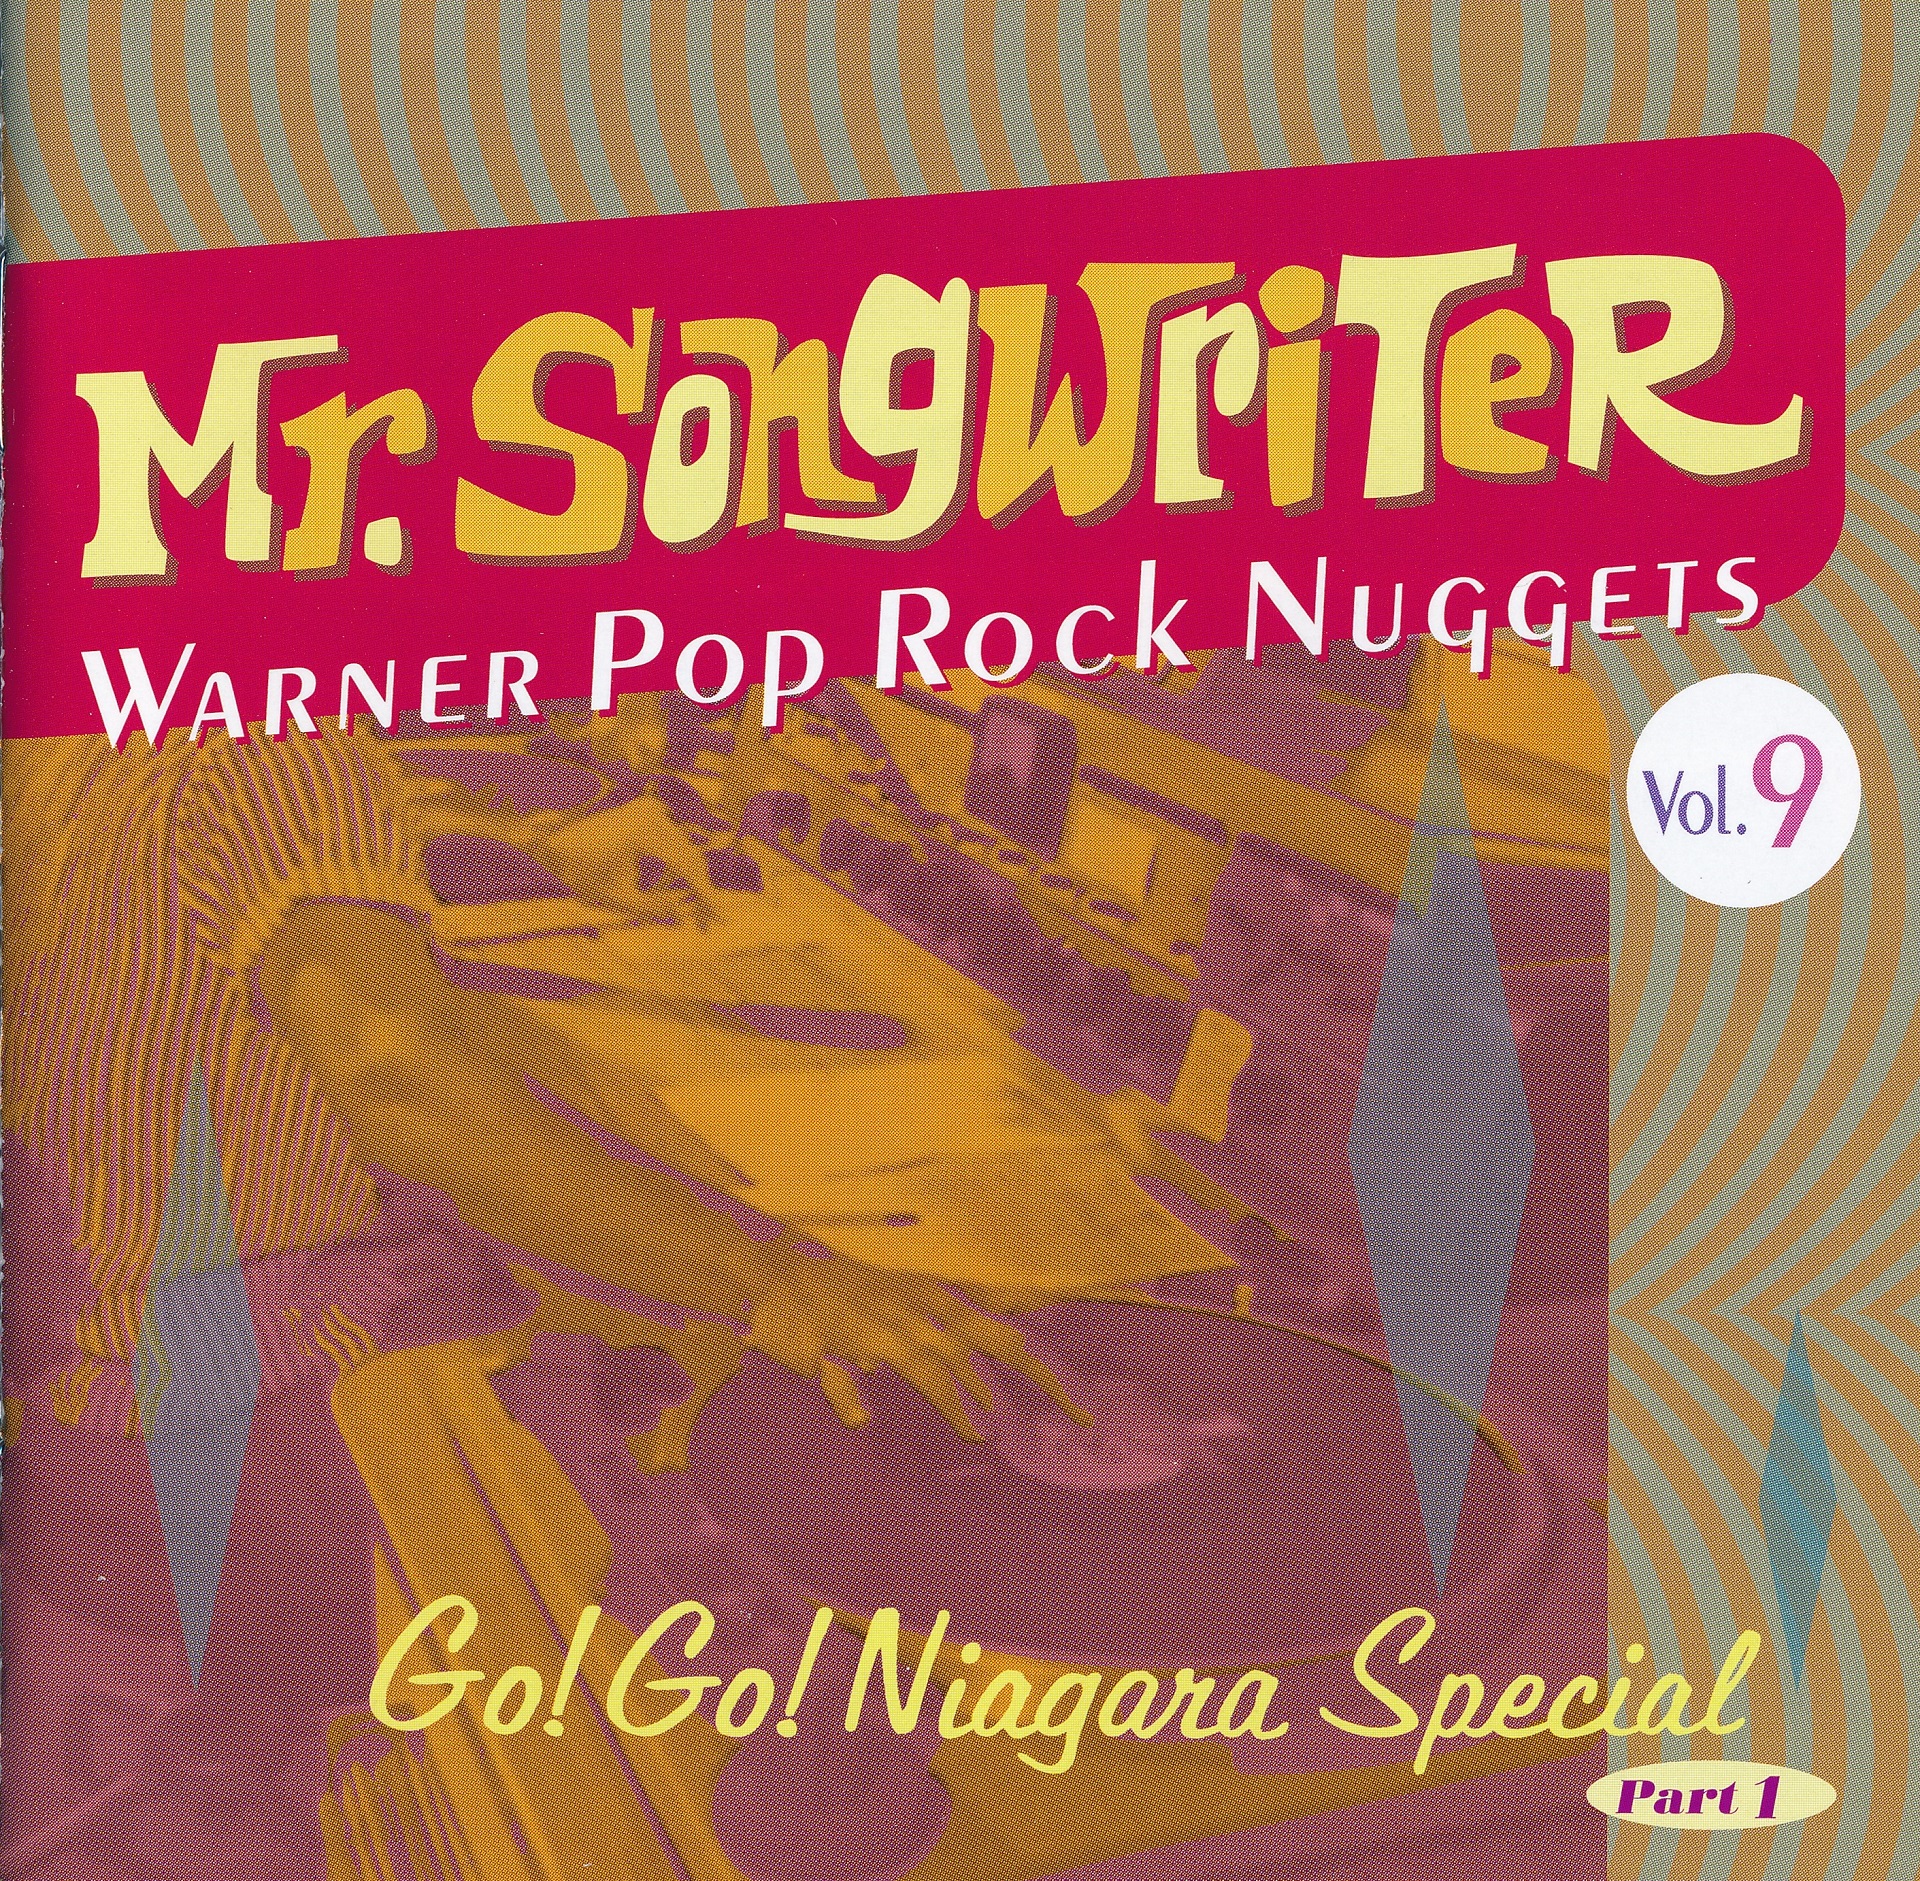 Warner Pop Rock Nuggets Volume 9 Mr. Songwriter